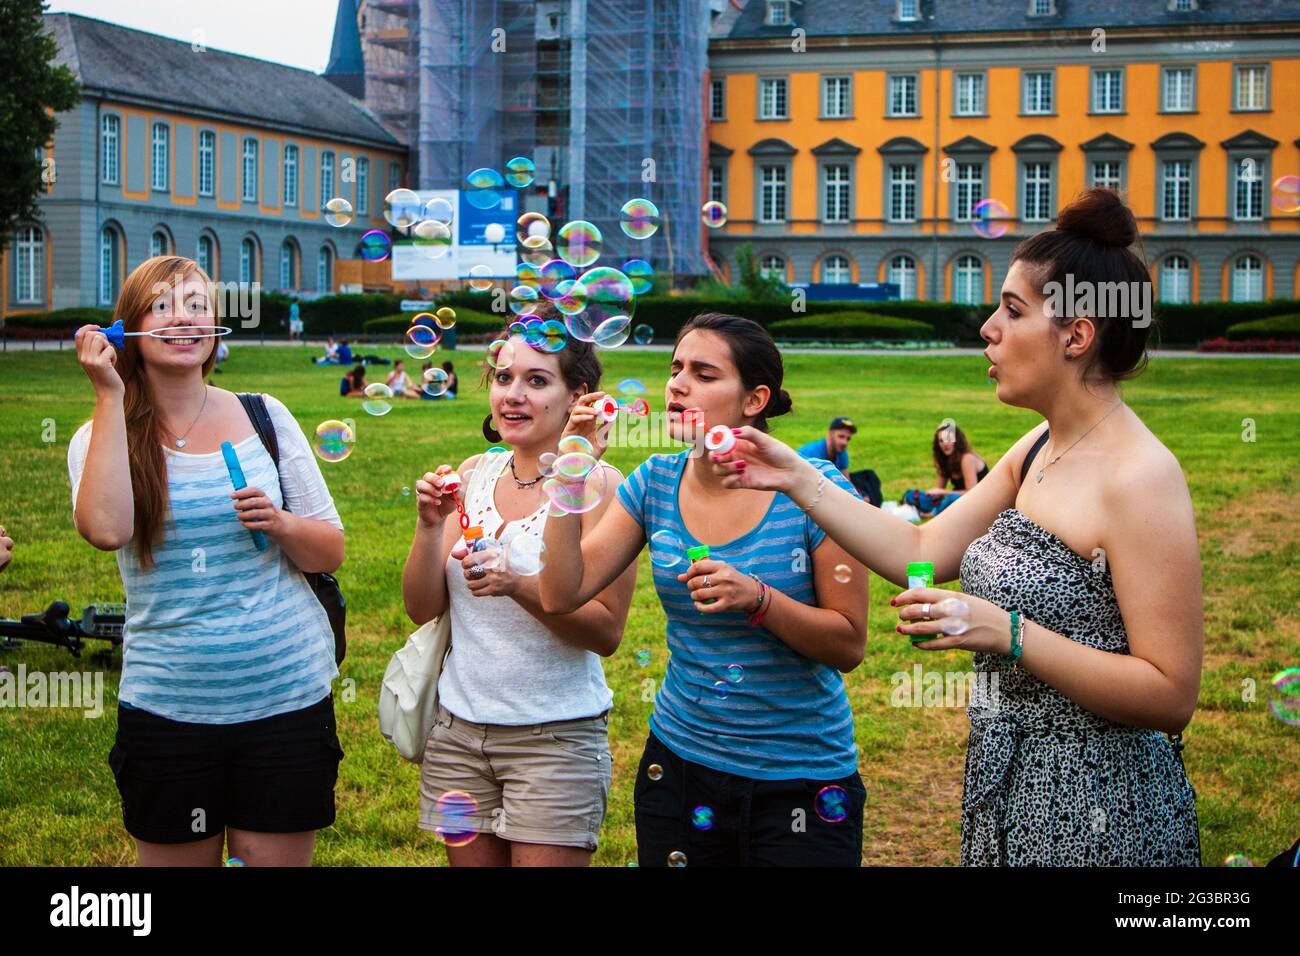 BONN, DEUTSCHLAND - JULI 22: Studenten der Universität Bonn blasen am 22. Juli 2013 in Bonn Blasen. Die Universität Bonn hat 31,000 Studenten. Stockfoto